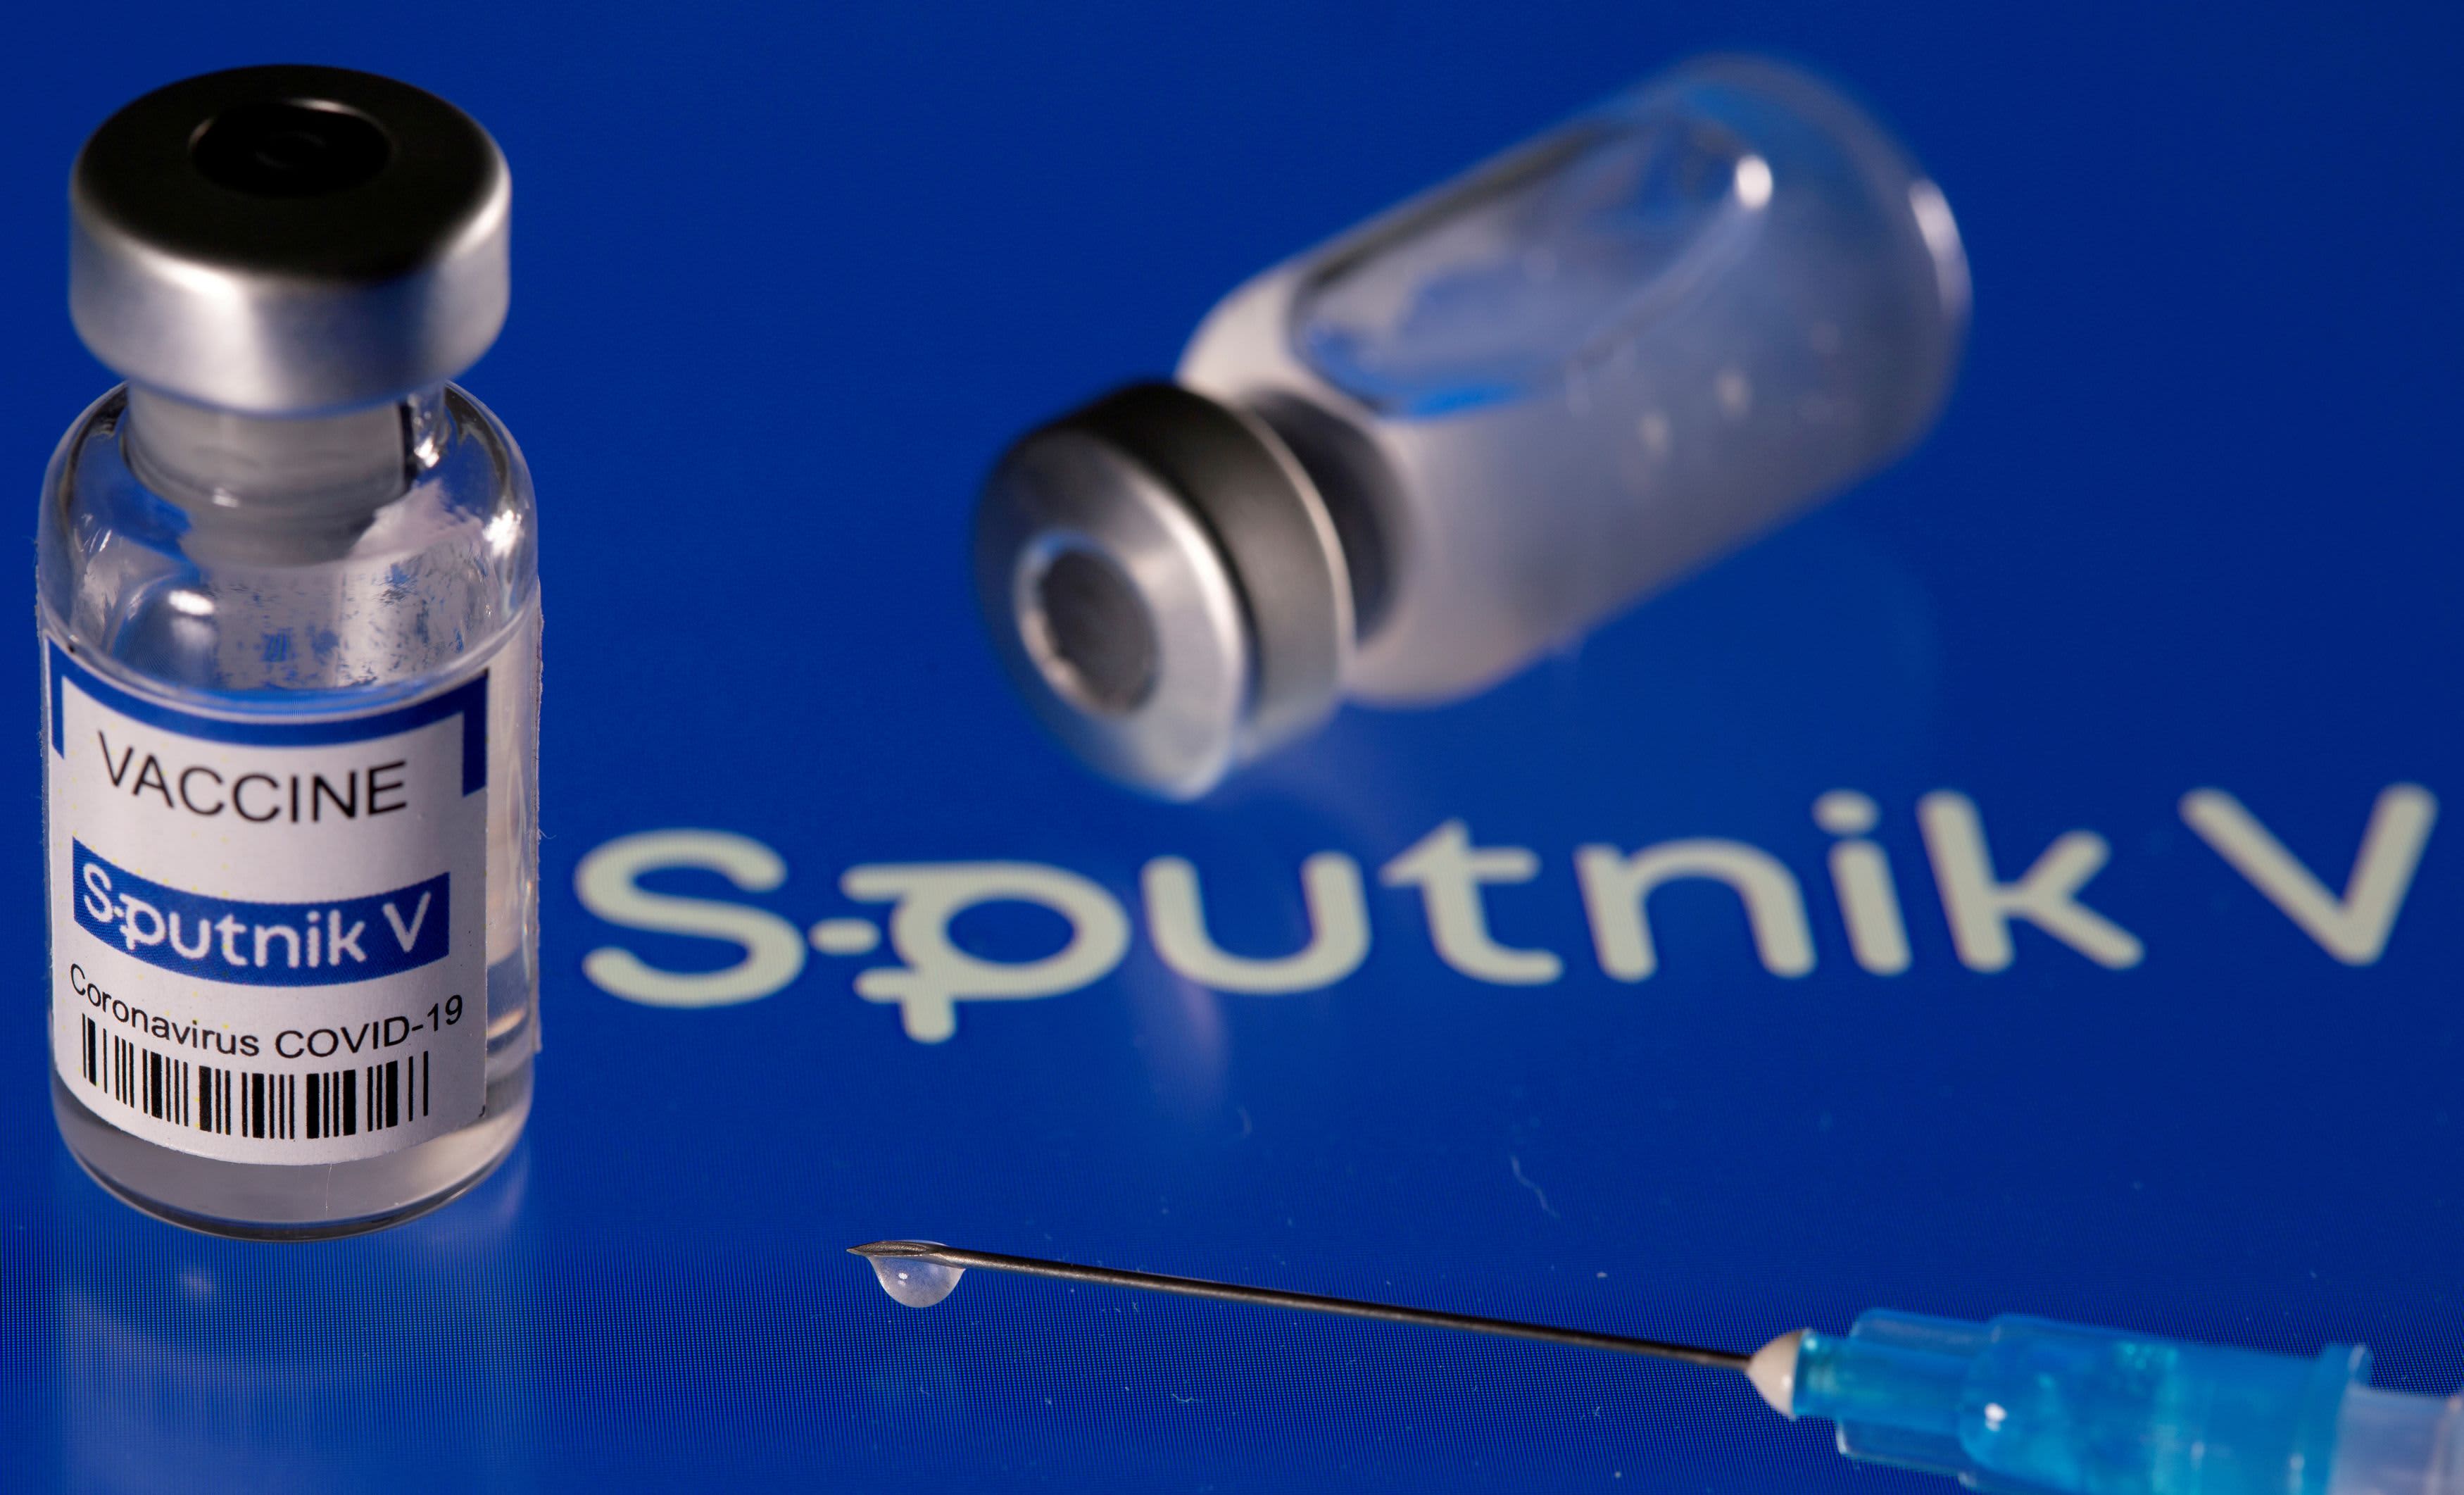 Covid India authorizes use of Russia's Sputnik V vaccine